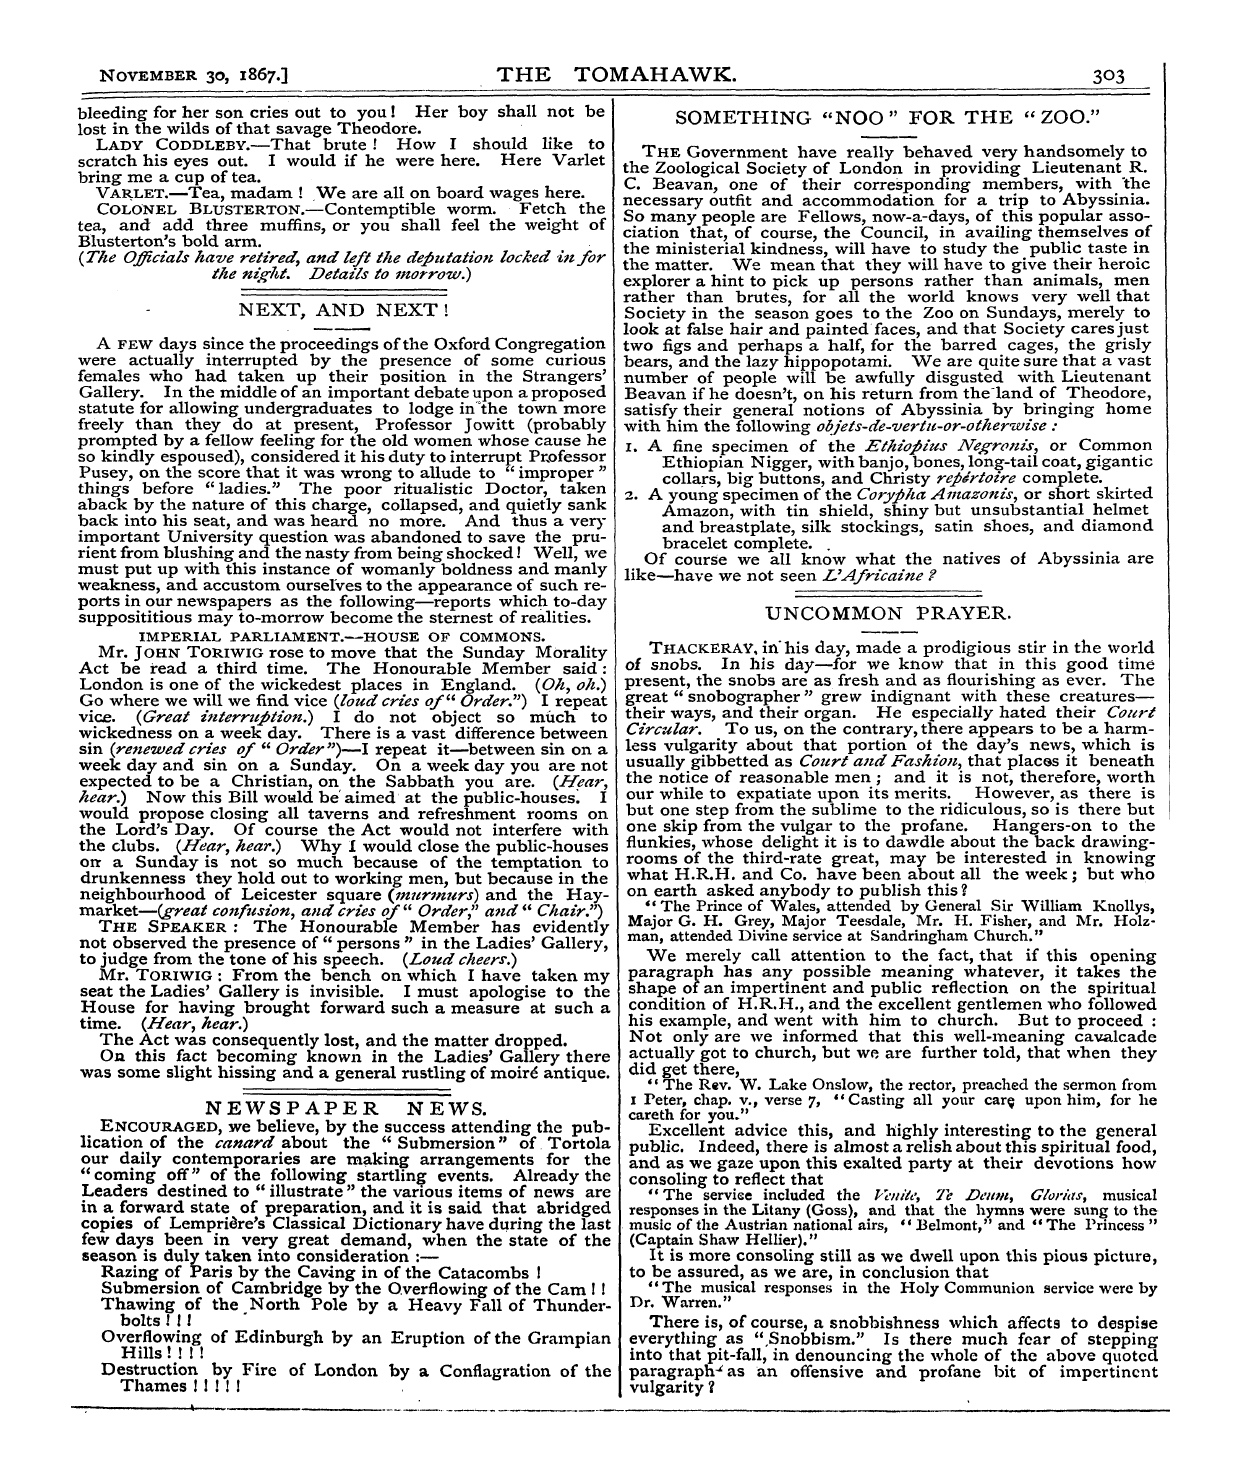 Tomahawk (1867-1870): jS F Y, 1st edition - Uncommon Prayer.